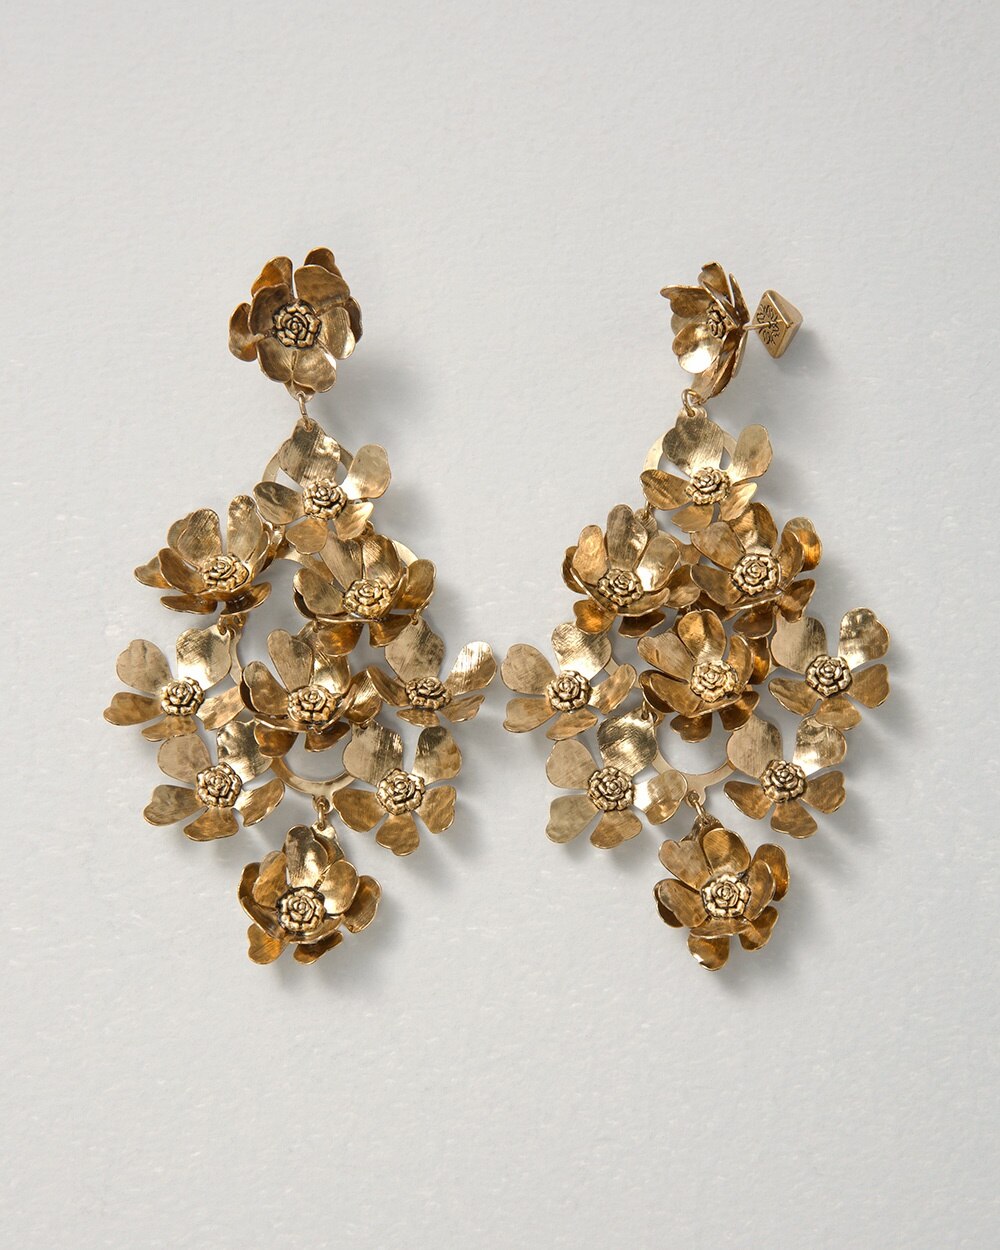 Goldtone Floral Statement Earrings